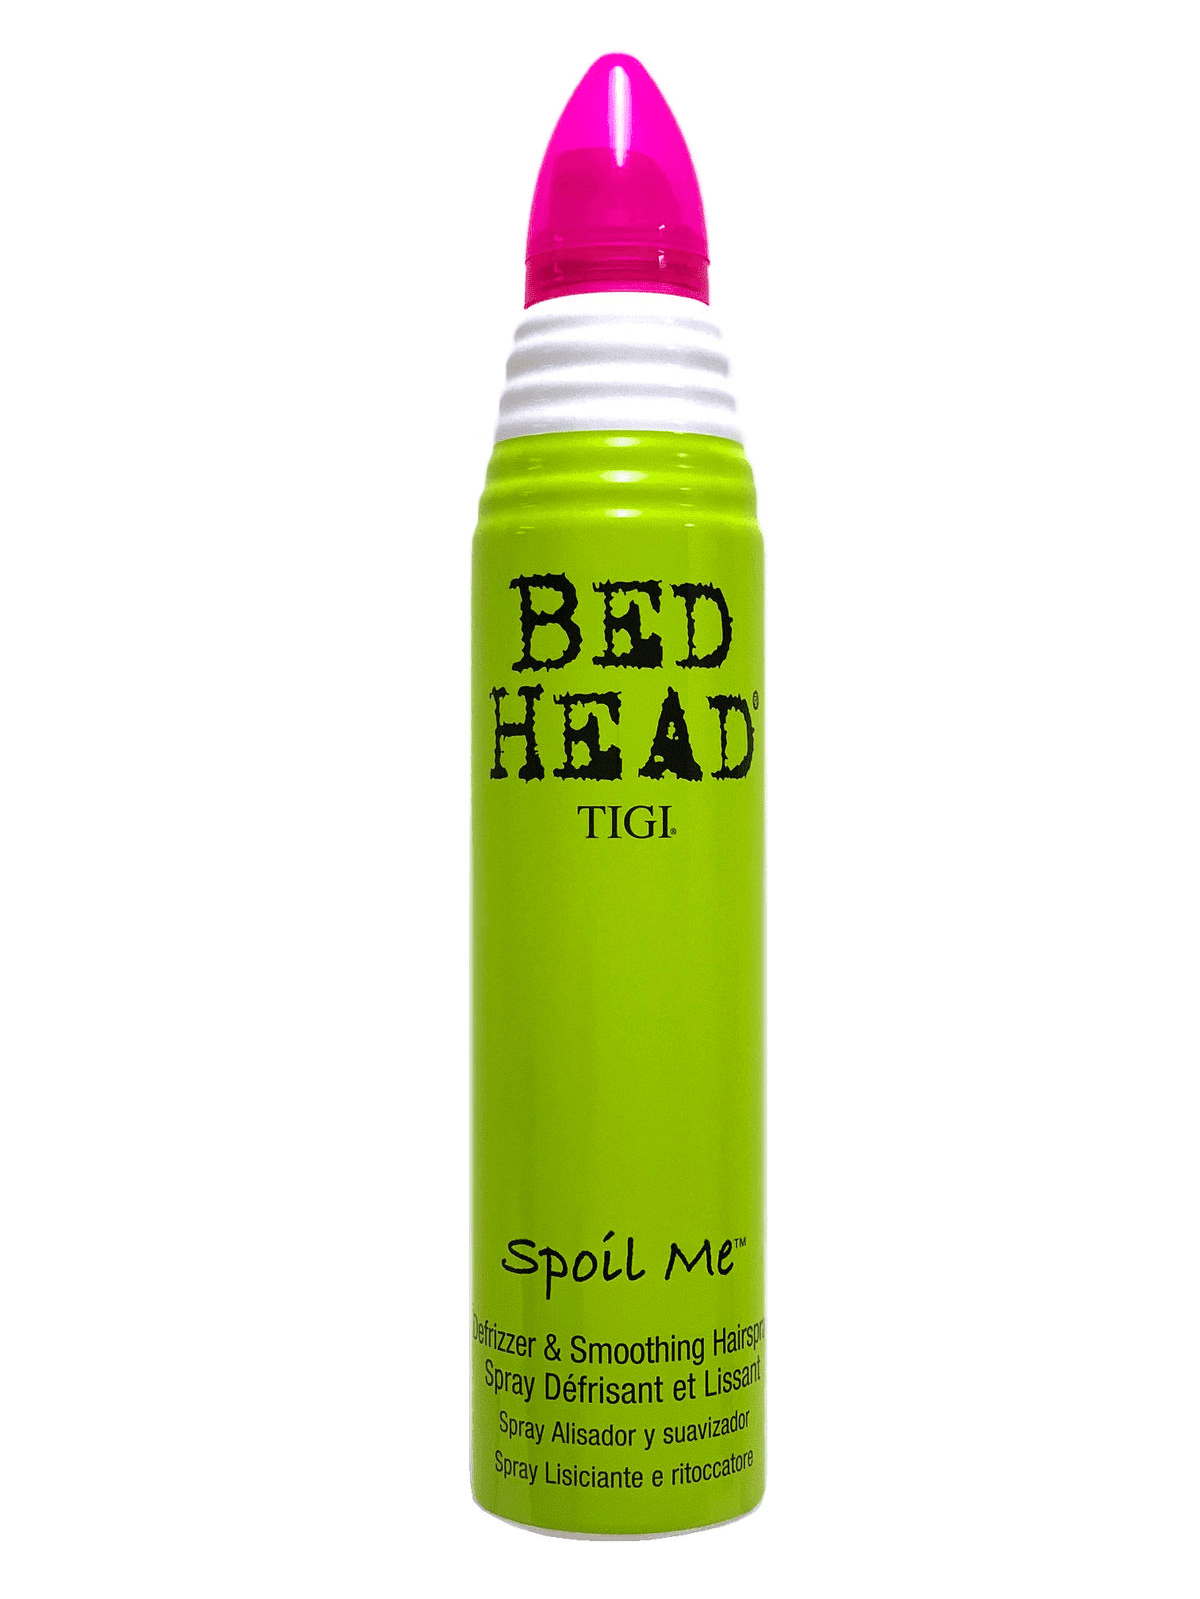 Tigi Bed Head Spoil Me Defrizzer And Smoothing Hairspray 9 Oz Walmart